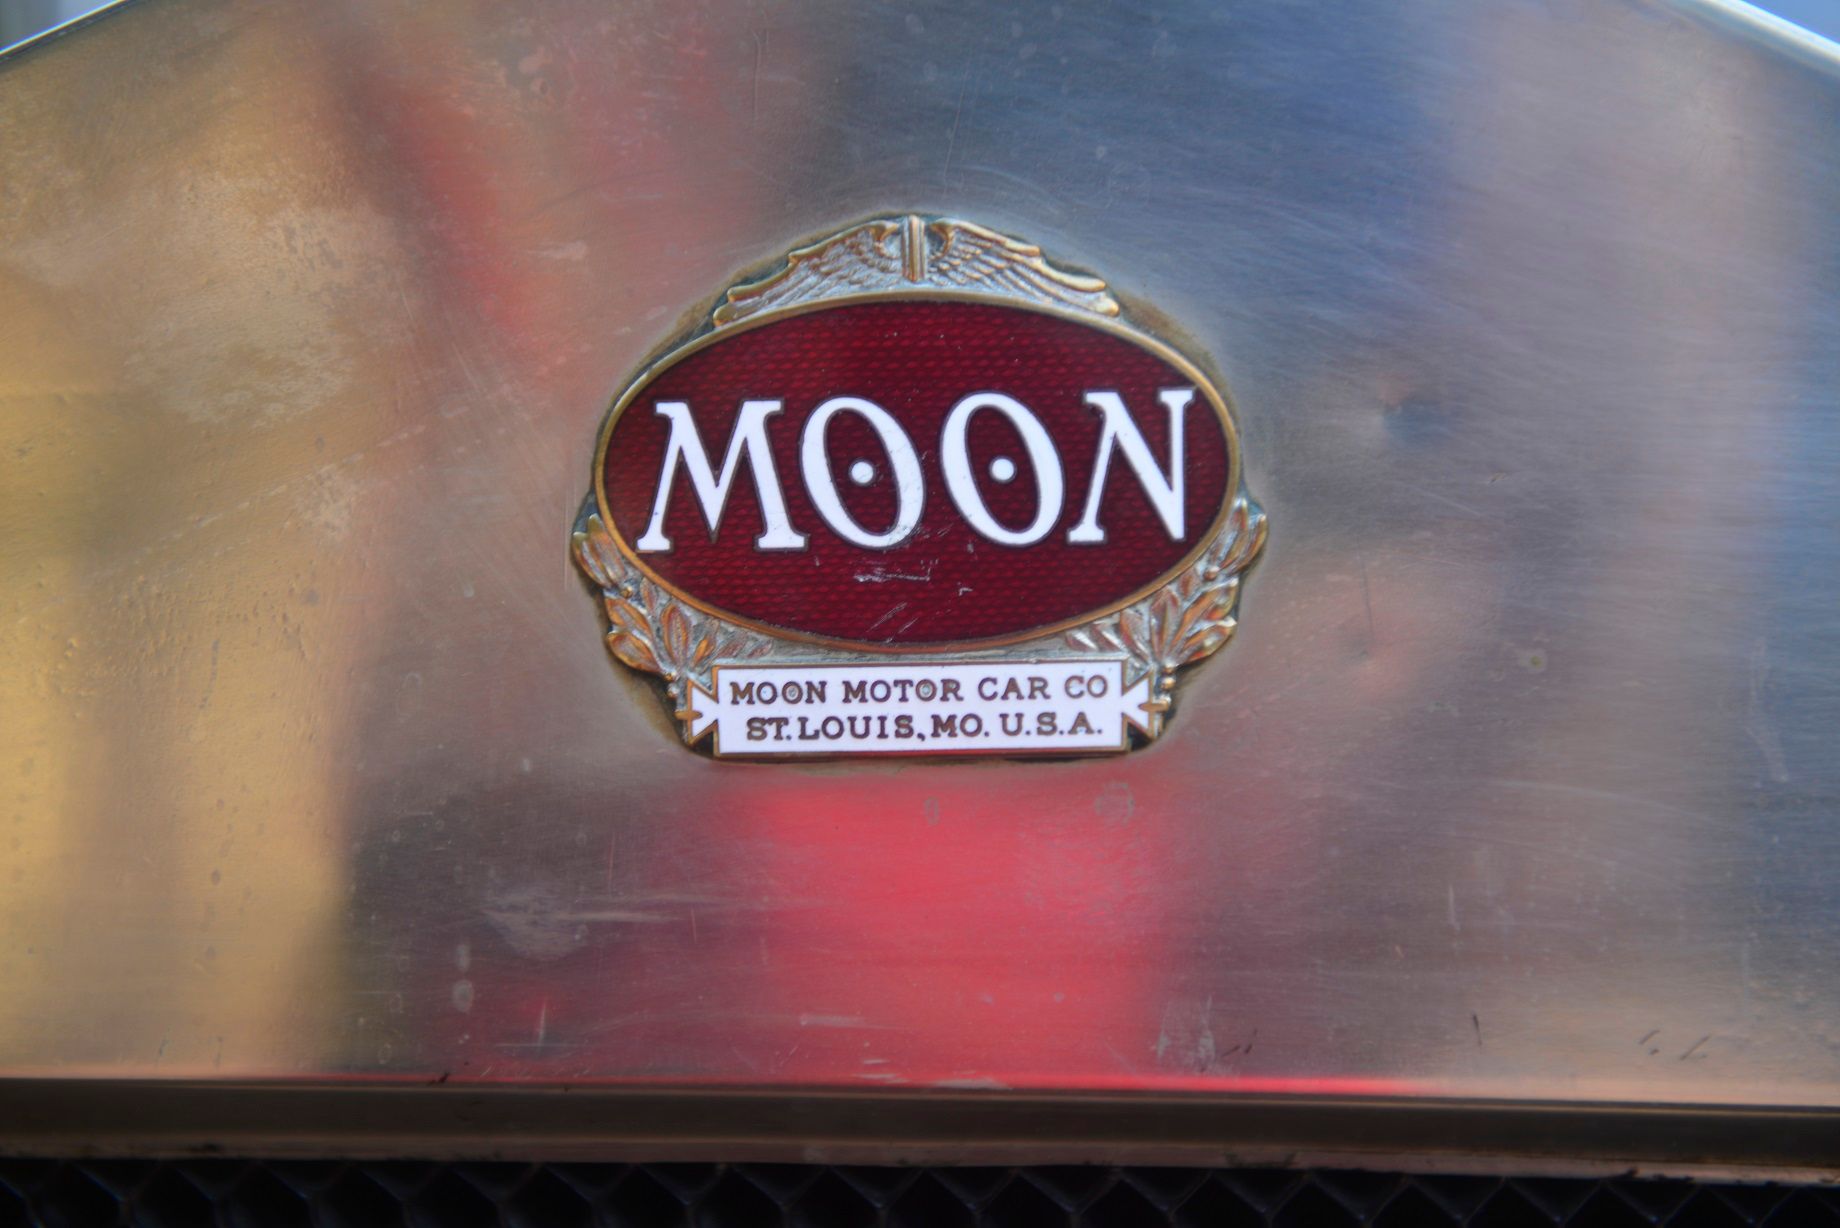 Moon 6-42 Touring Export Moon Car Club antique cars vintage car classic car 